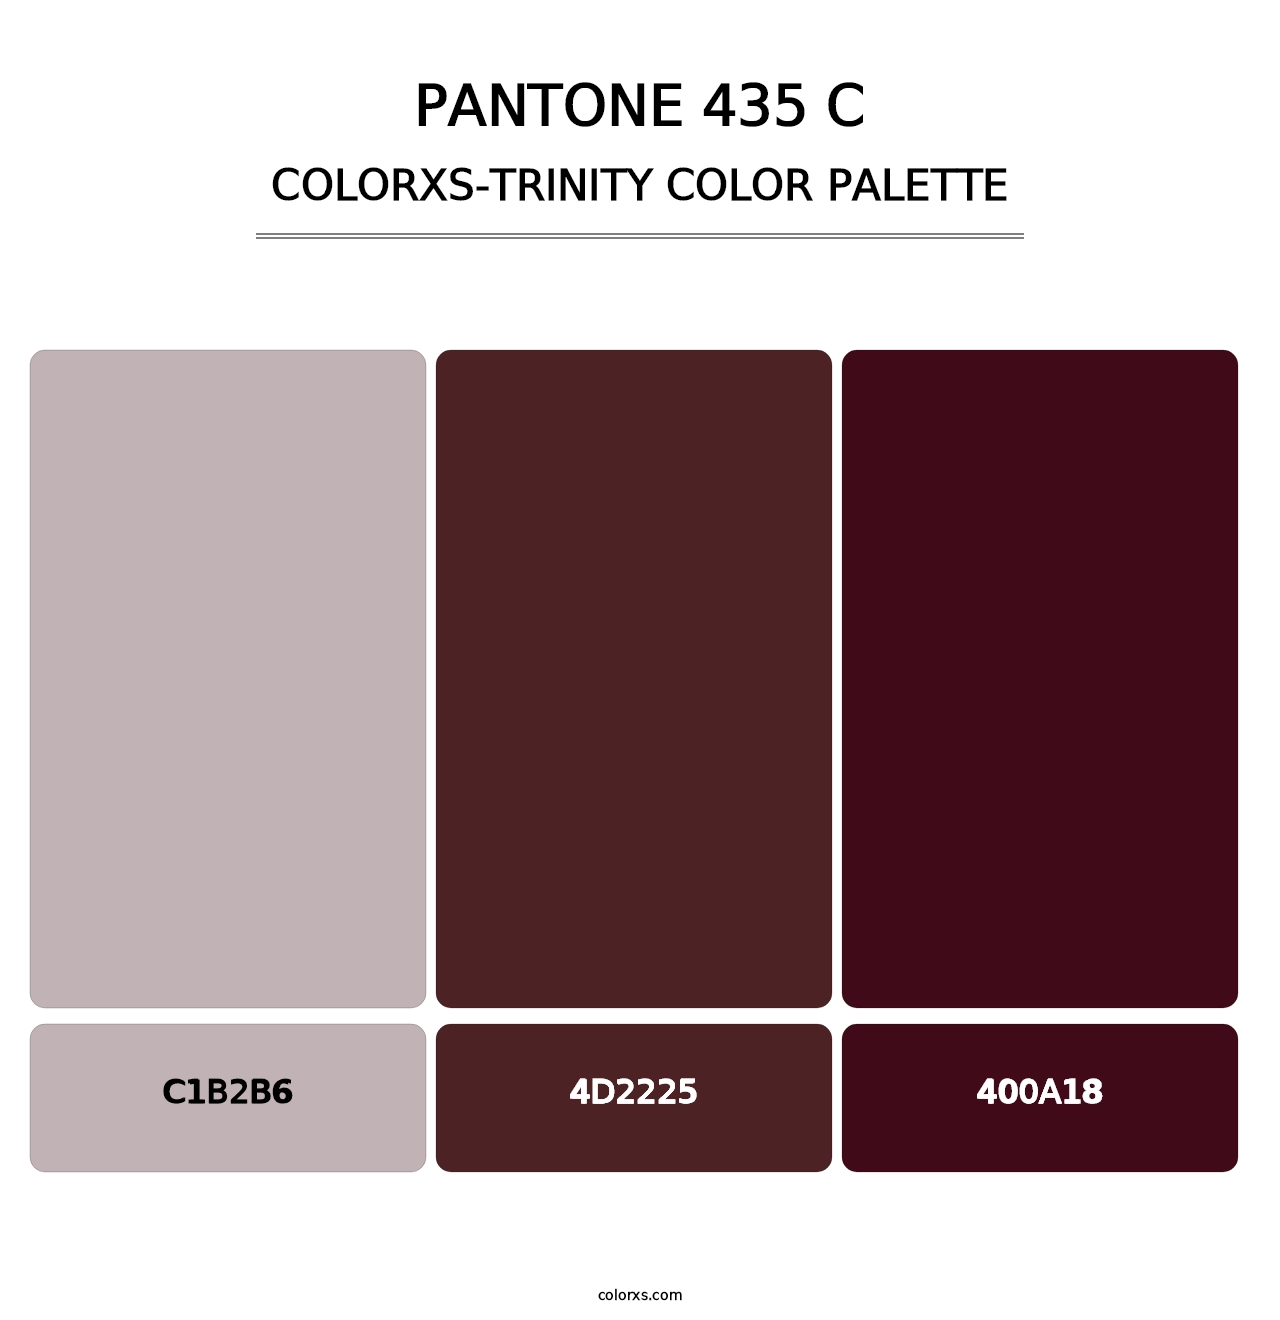 PANTONE 435 C - Colorxs Trinity Palette